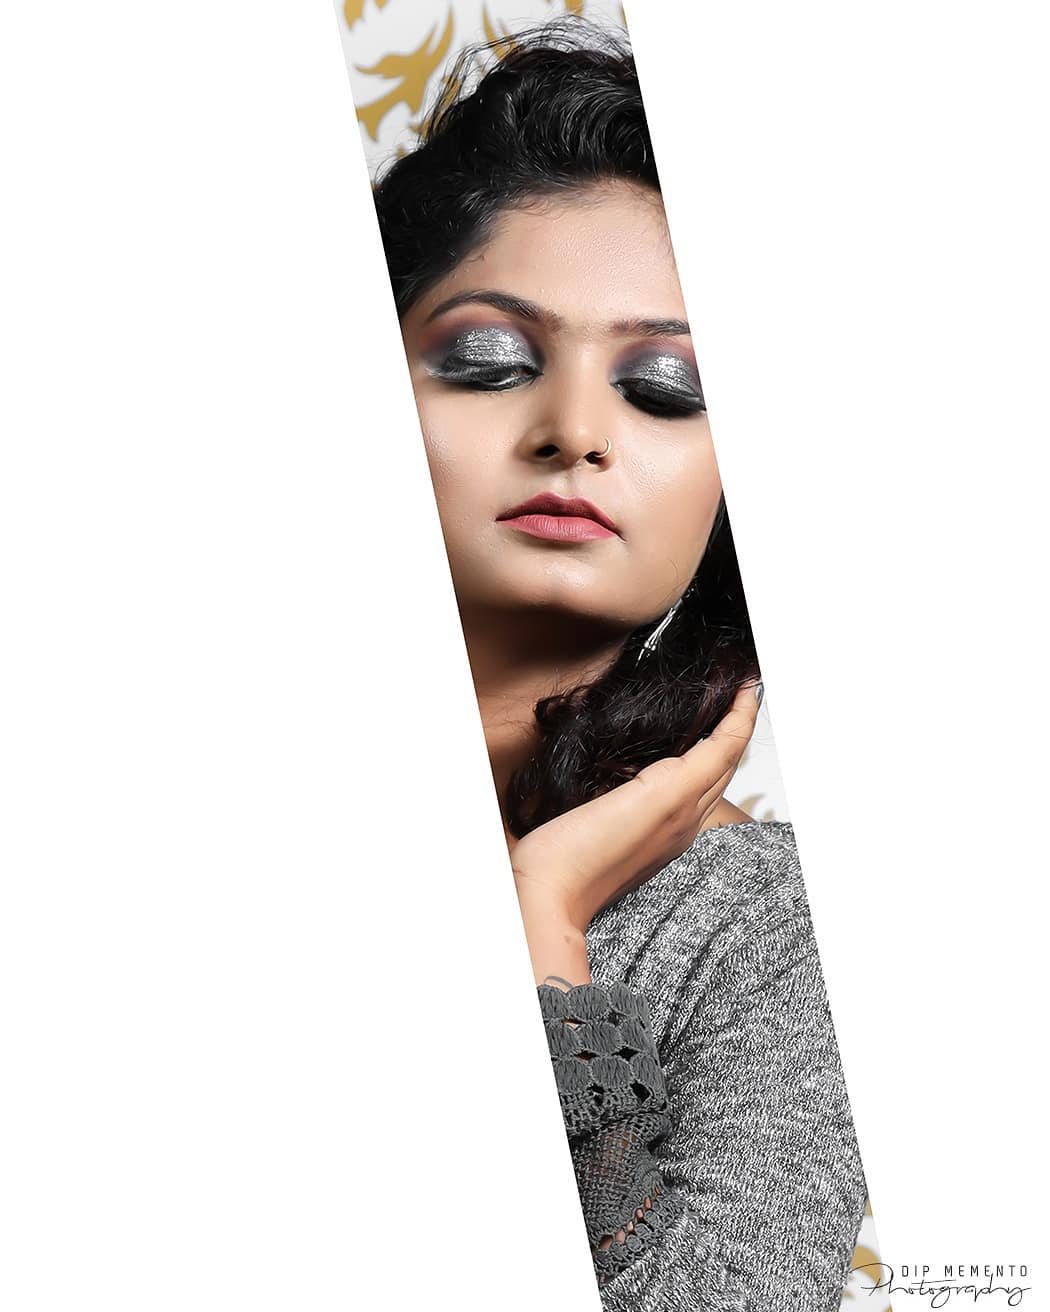 MUA : @dishabeautysaloonacademynikol
Shoot by : @dip_memento_photography
Face: @divyagoshwami .
.
#portraits #dslrofficial #indianphotographers 
#portraitsindia #canon #colorsofindia
#photosofindia 
#fashion
#photographersofindia
#portraitsindia #fashionblogger #dipmementophotography
#makeupartist #photography #portraitvision #portraitmood #indianportraits #colorsofindia #portraitphotography #ahmedabad #indianpictures 
#portraitmood #portraits_india #bokehphotography #bongportrait #bokehphotography #yesindia #9924227745 #dipmementophotography #dip_memento_photography